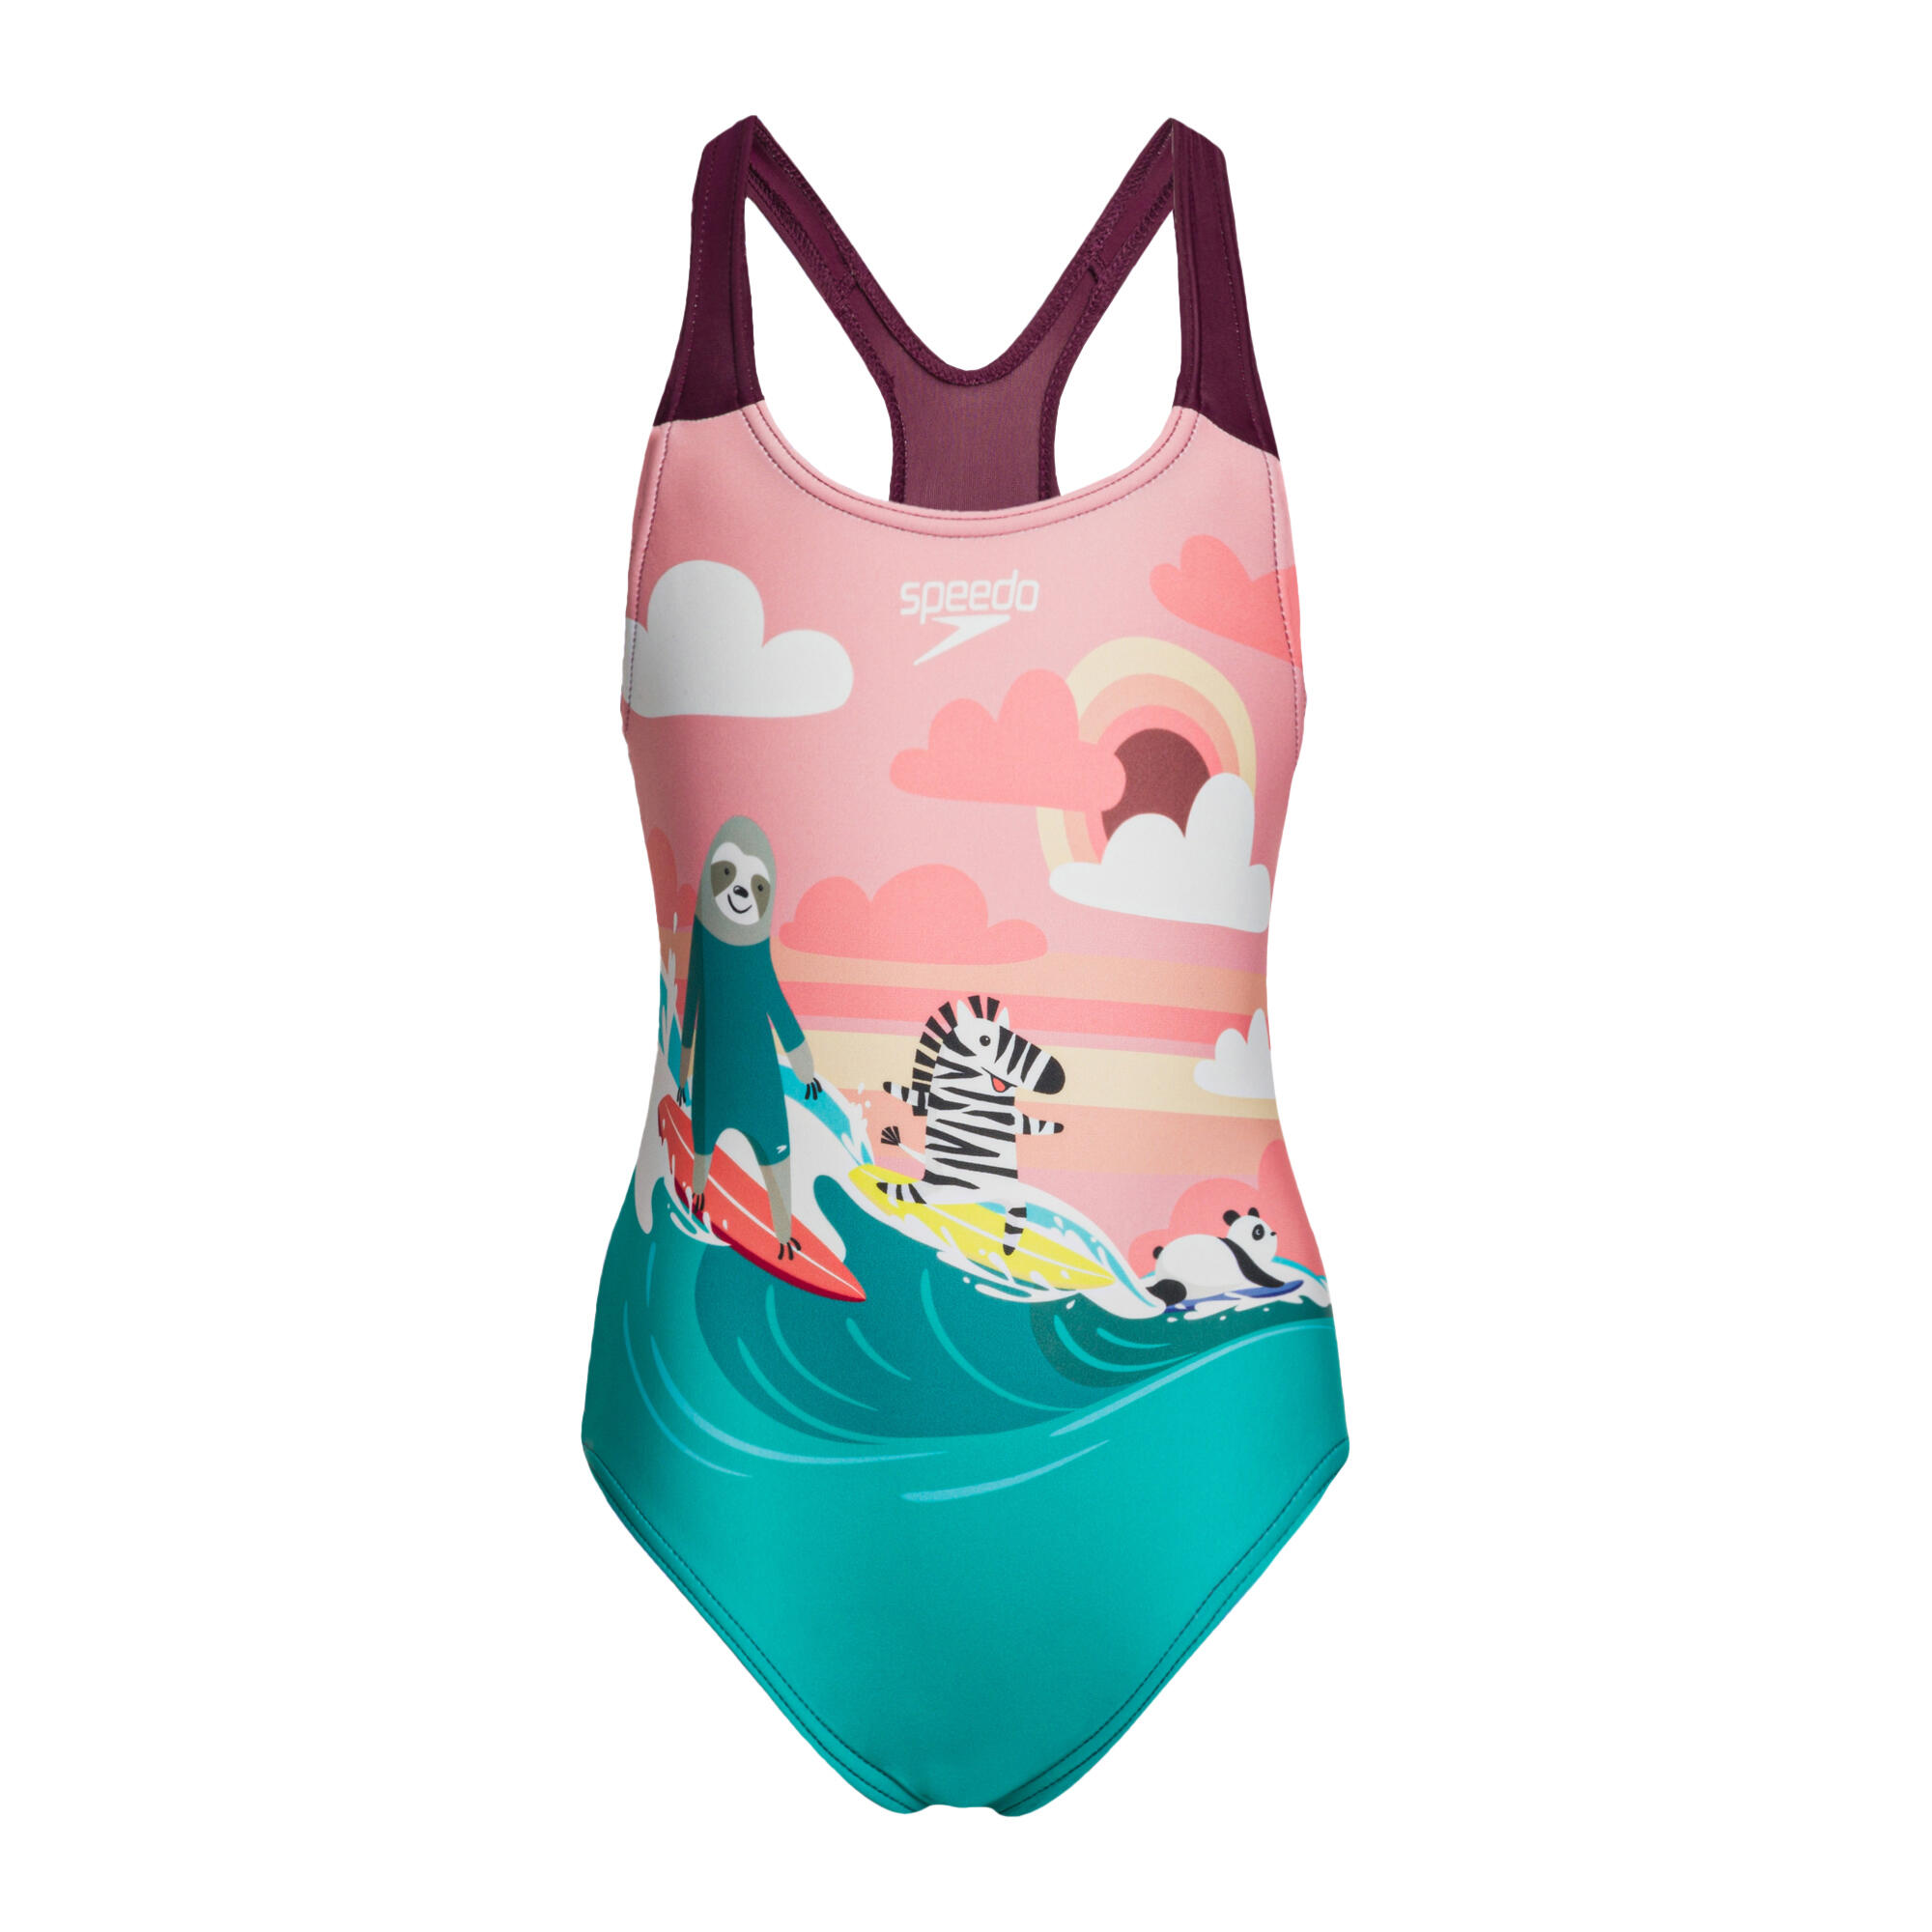 SPEEDO Speedo Junior Girls' Digital Printed Swimsuit - Pesca Pink